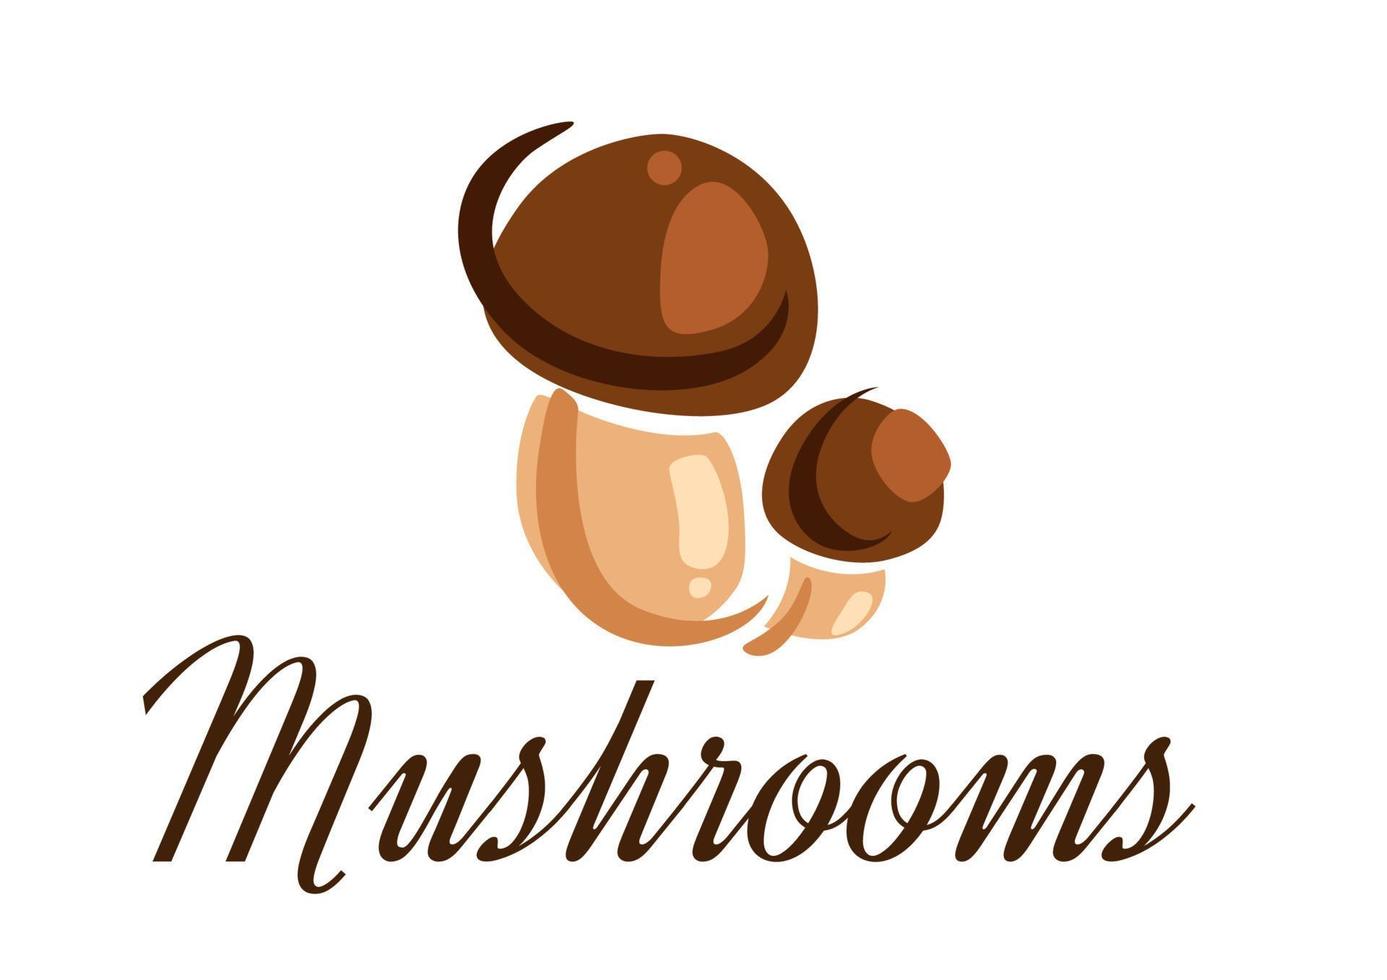 Fresh forest mushrooms vector